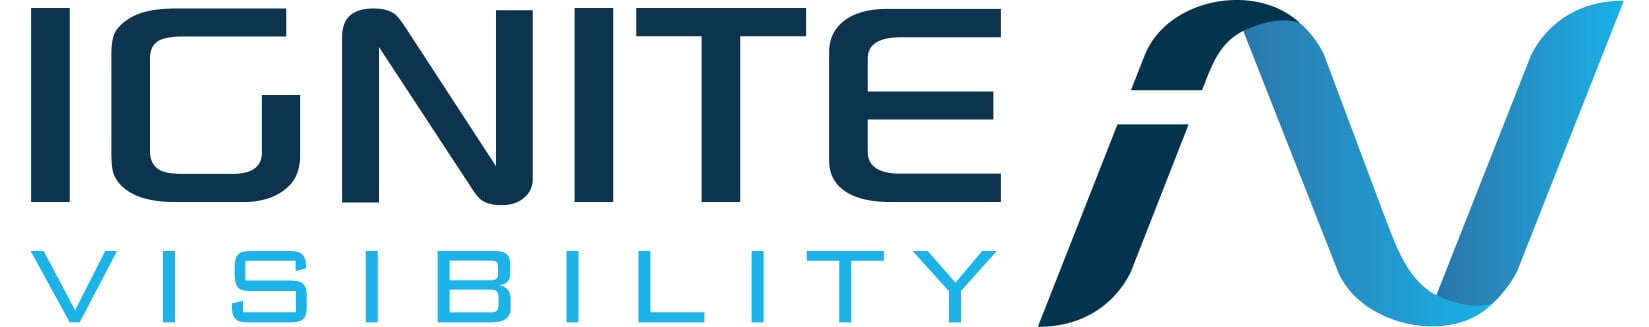 Best Hotel SEO Agency Logo: Ignite Visibility